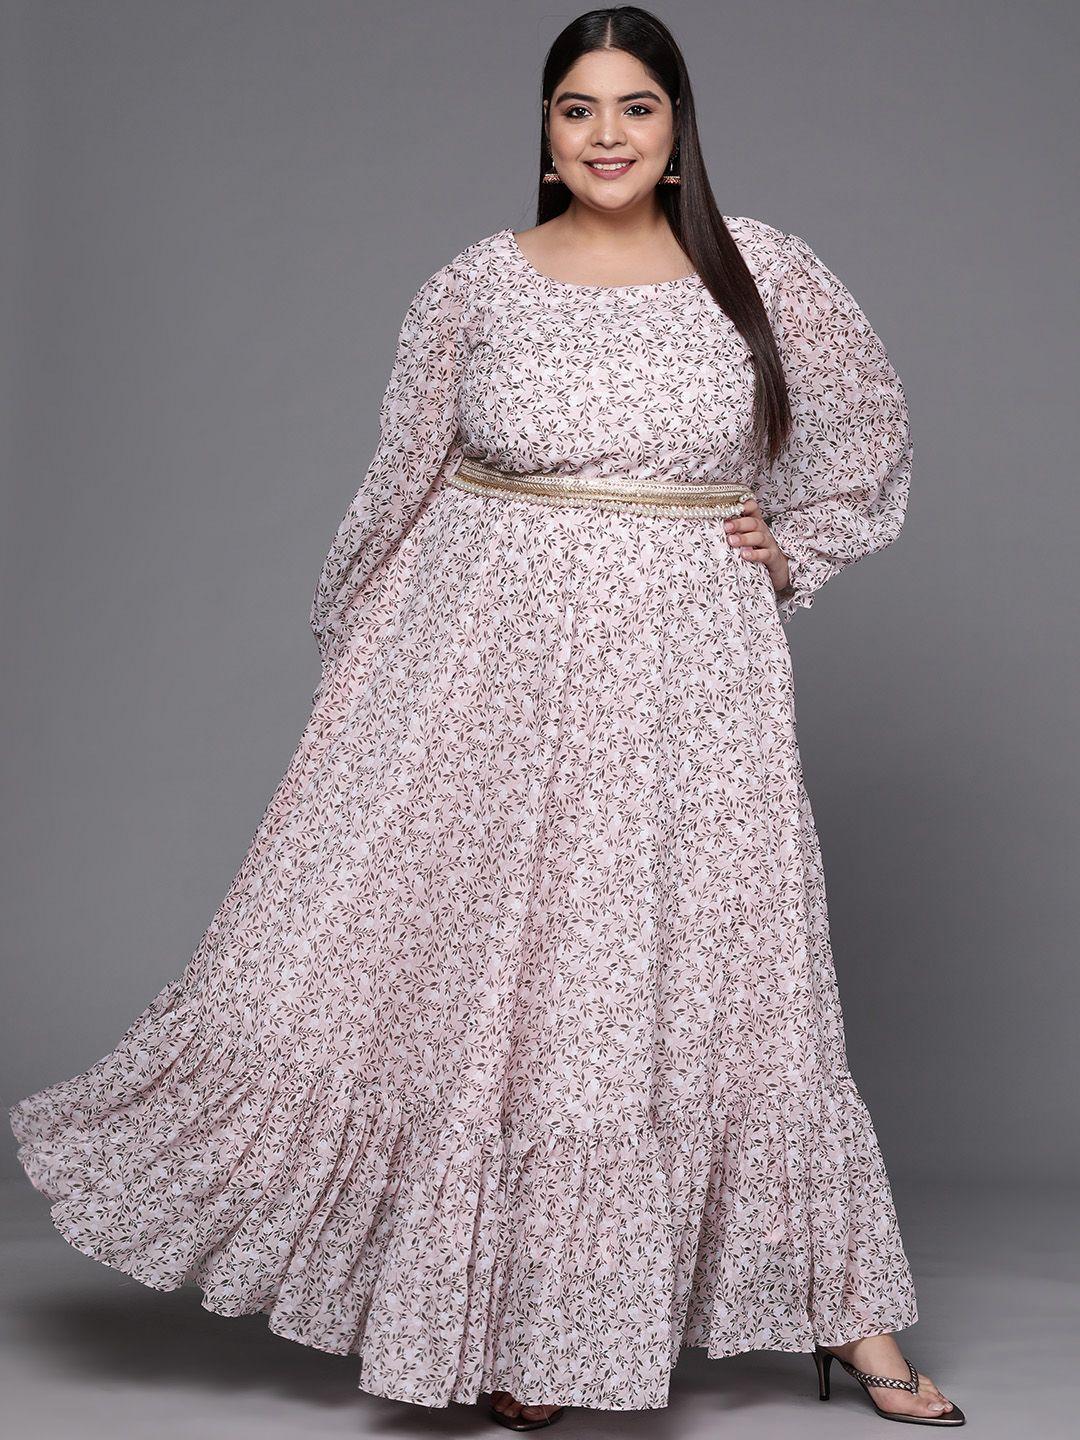 inddus plus pink & grey floral print georgette ethnic maxi dress